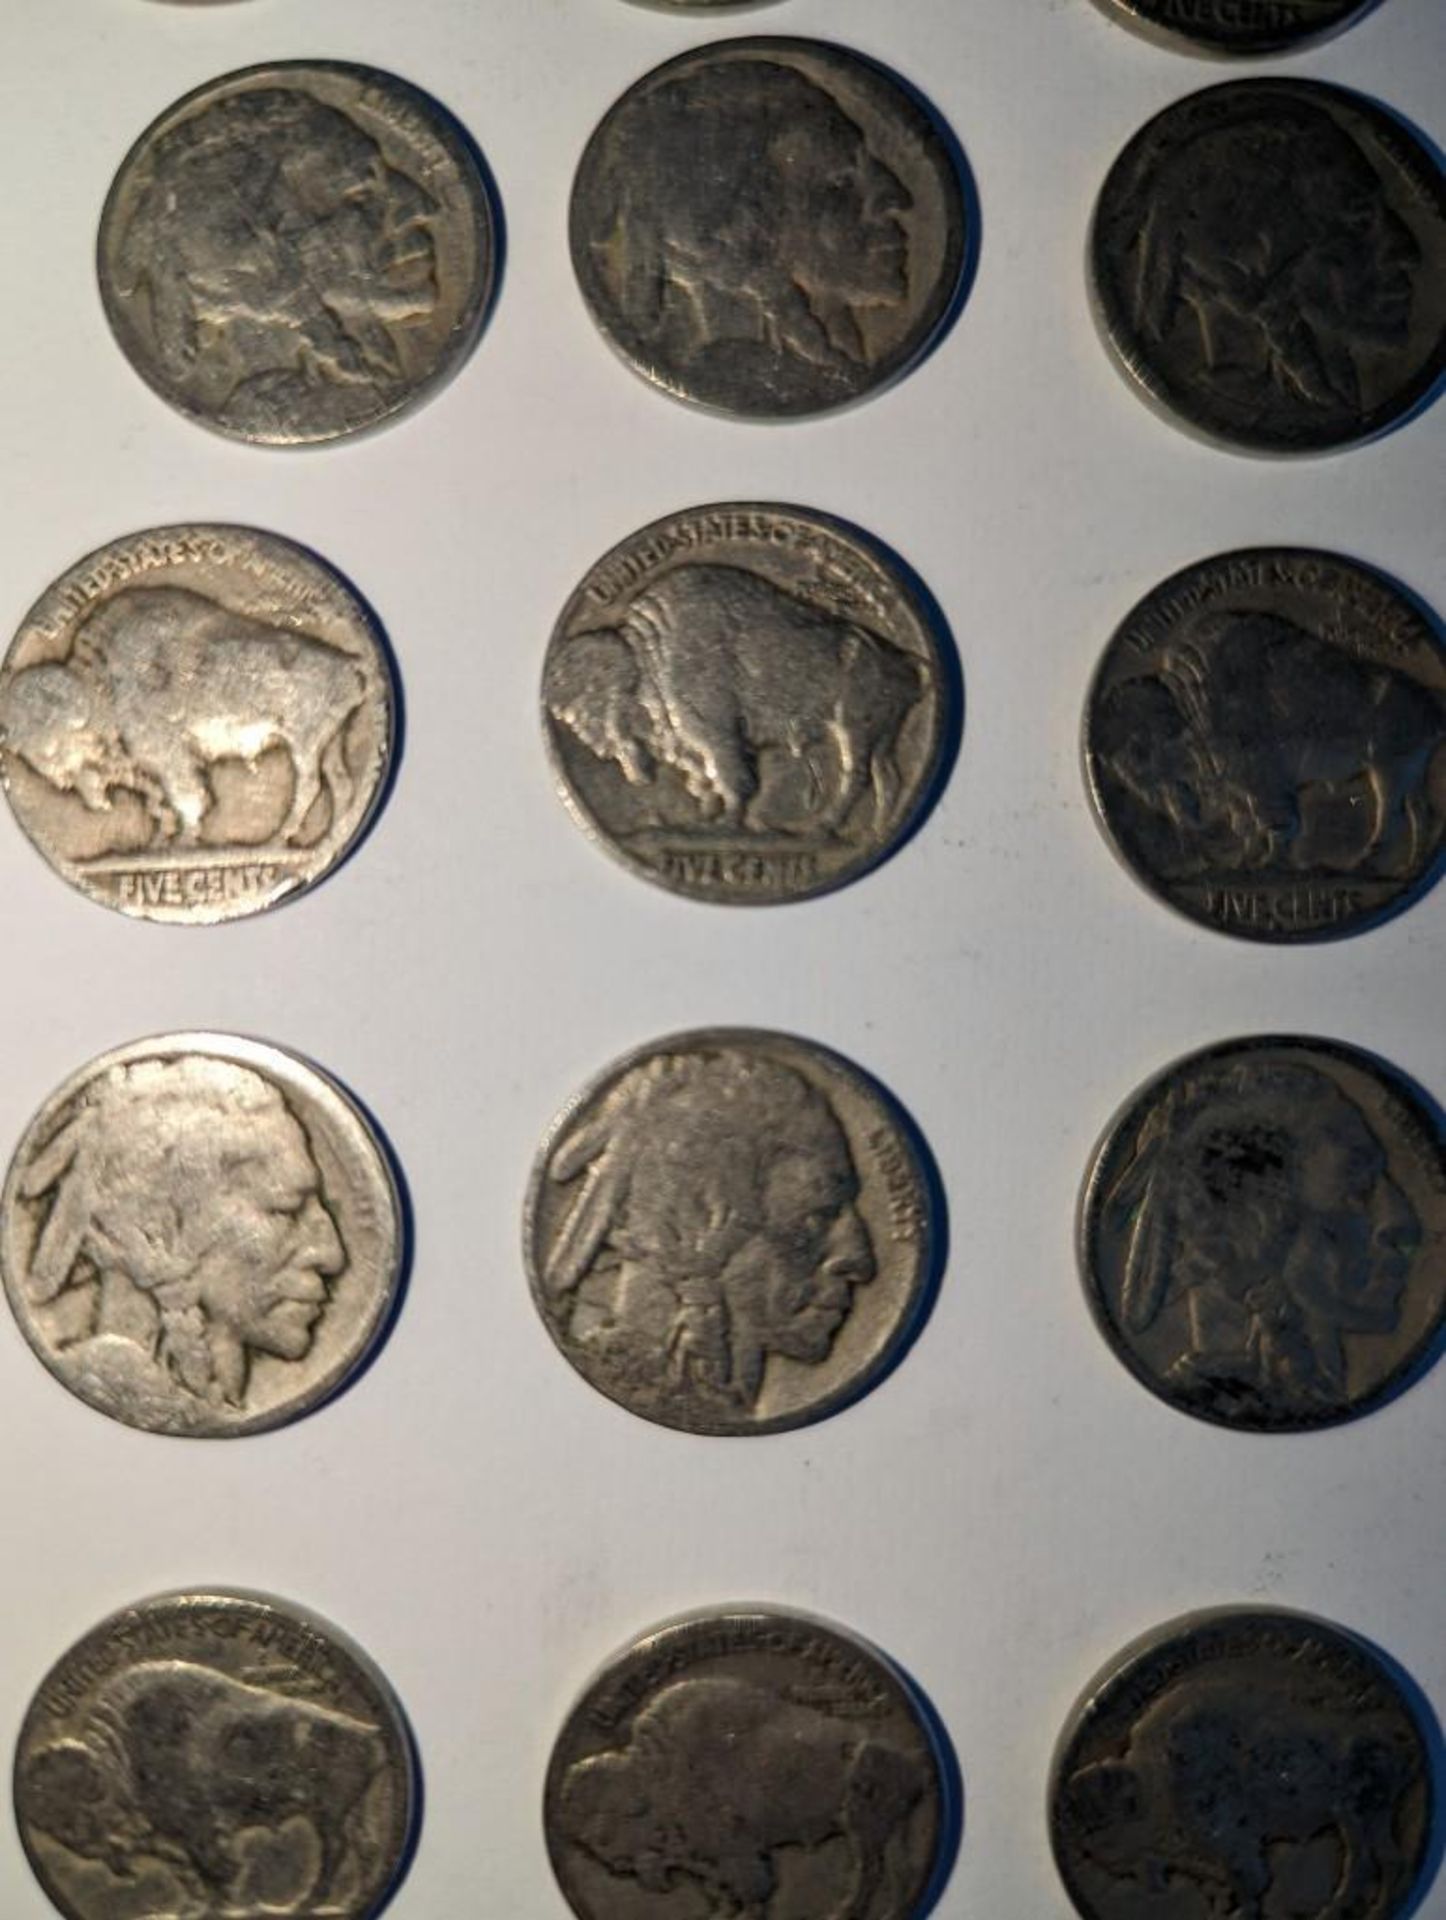 Roll of 40 Buffalo Nickels - Image 2 of 4